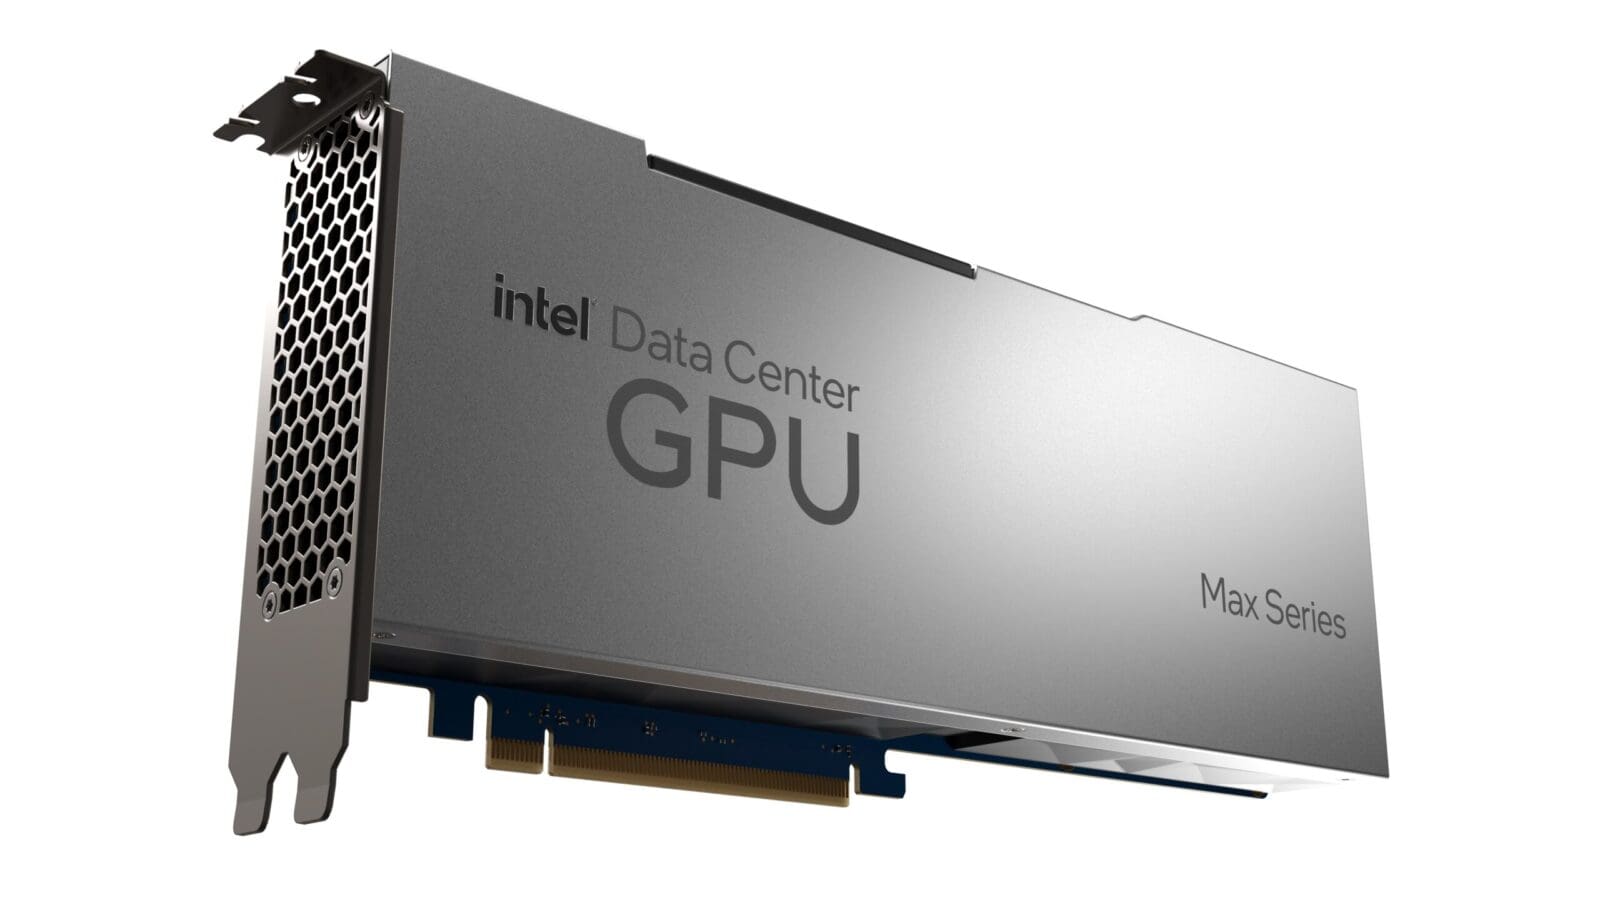 Intel Data Center GPU Max Series PCIe scaled 1